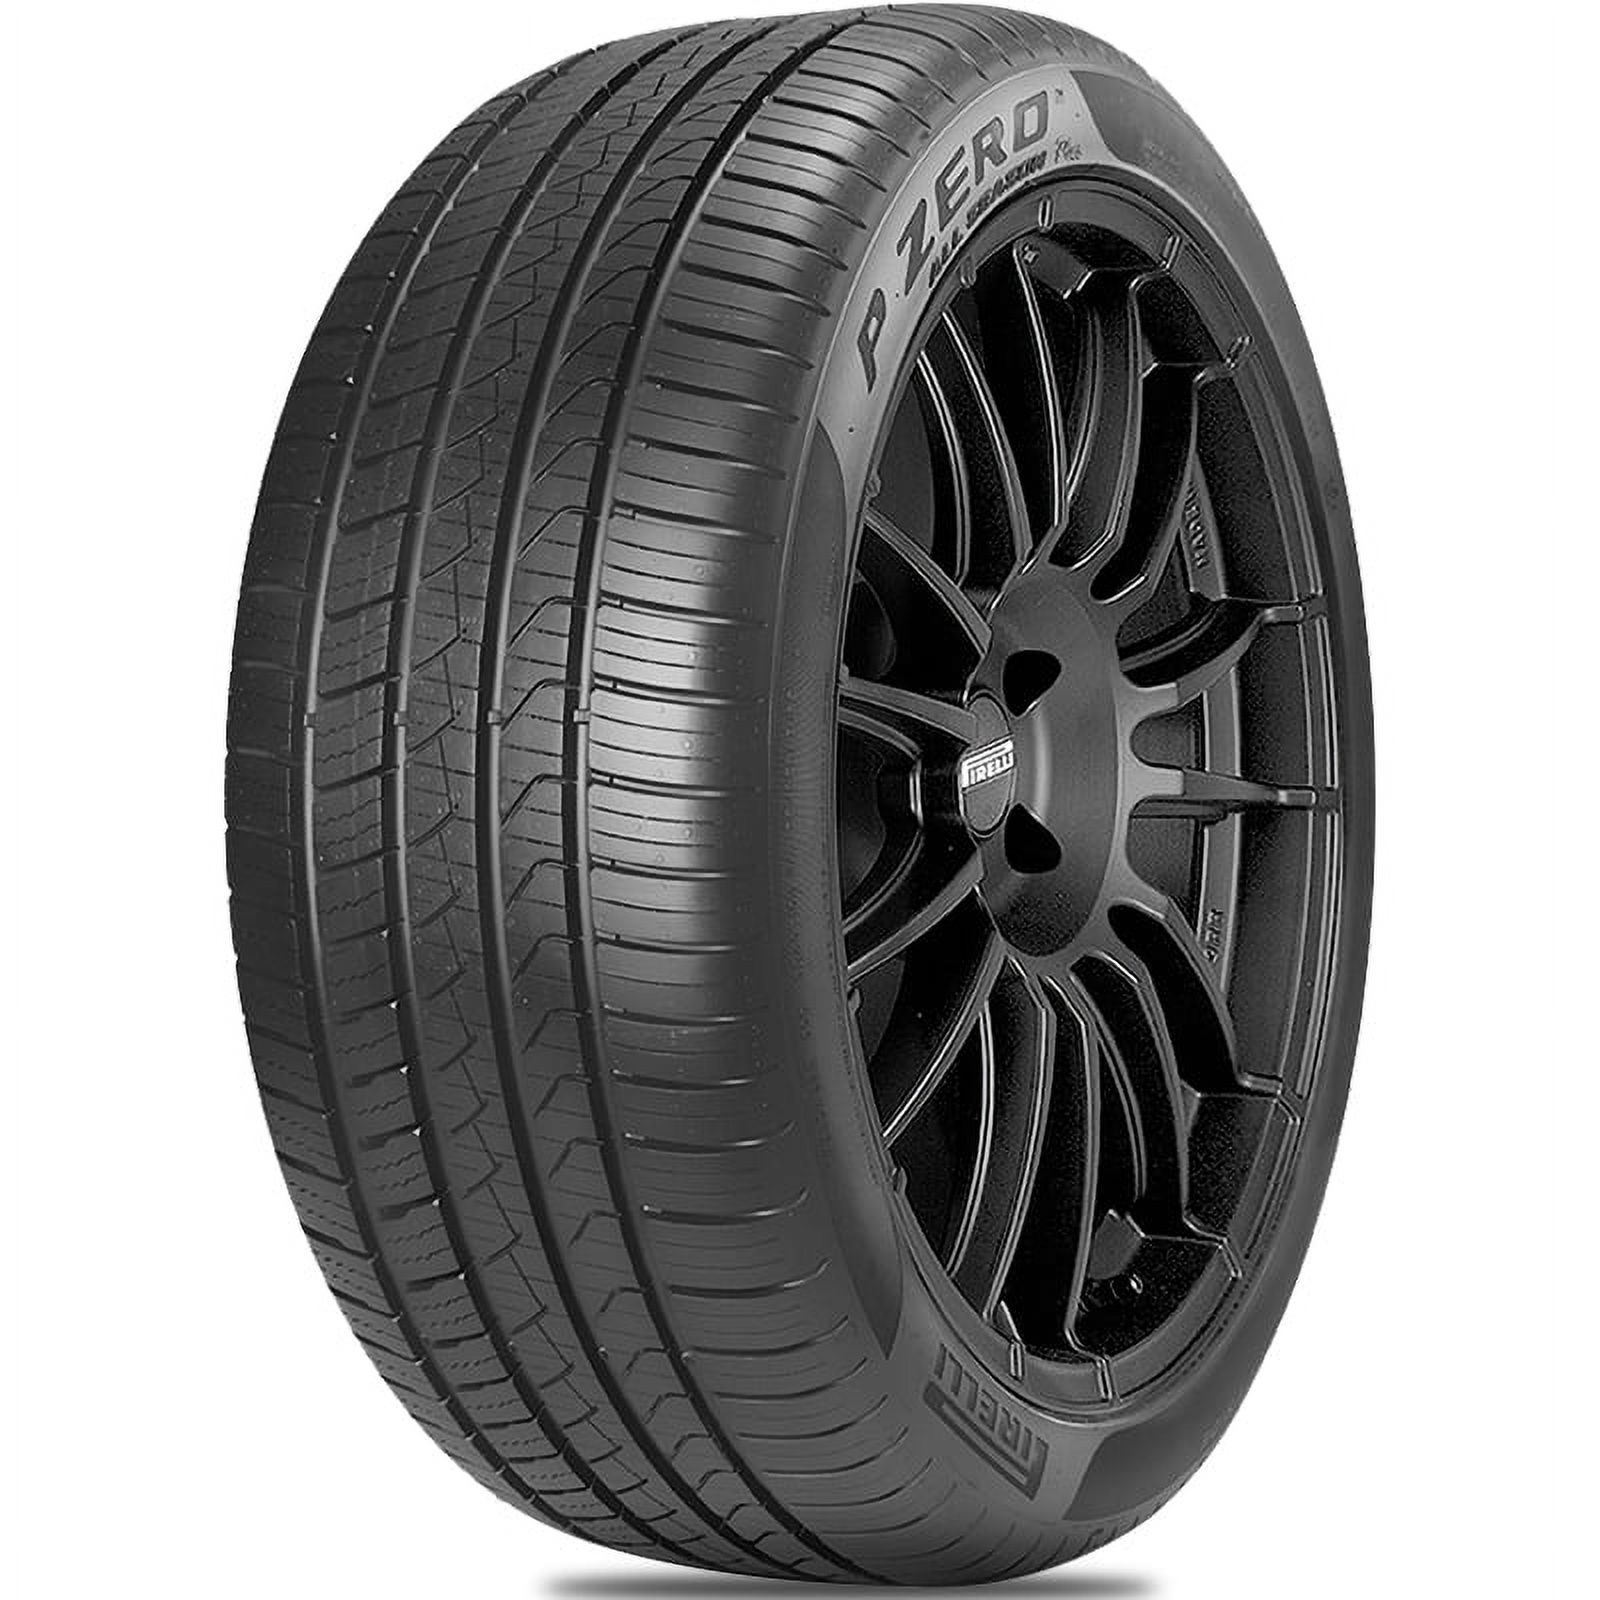 Pirelli P Zero All Season Plus UHP All Season 245/45R20 103Y XL Passenger Tire - image 1 of 3